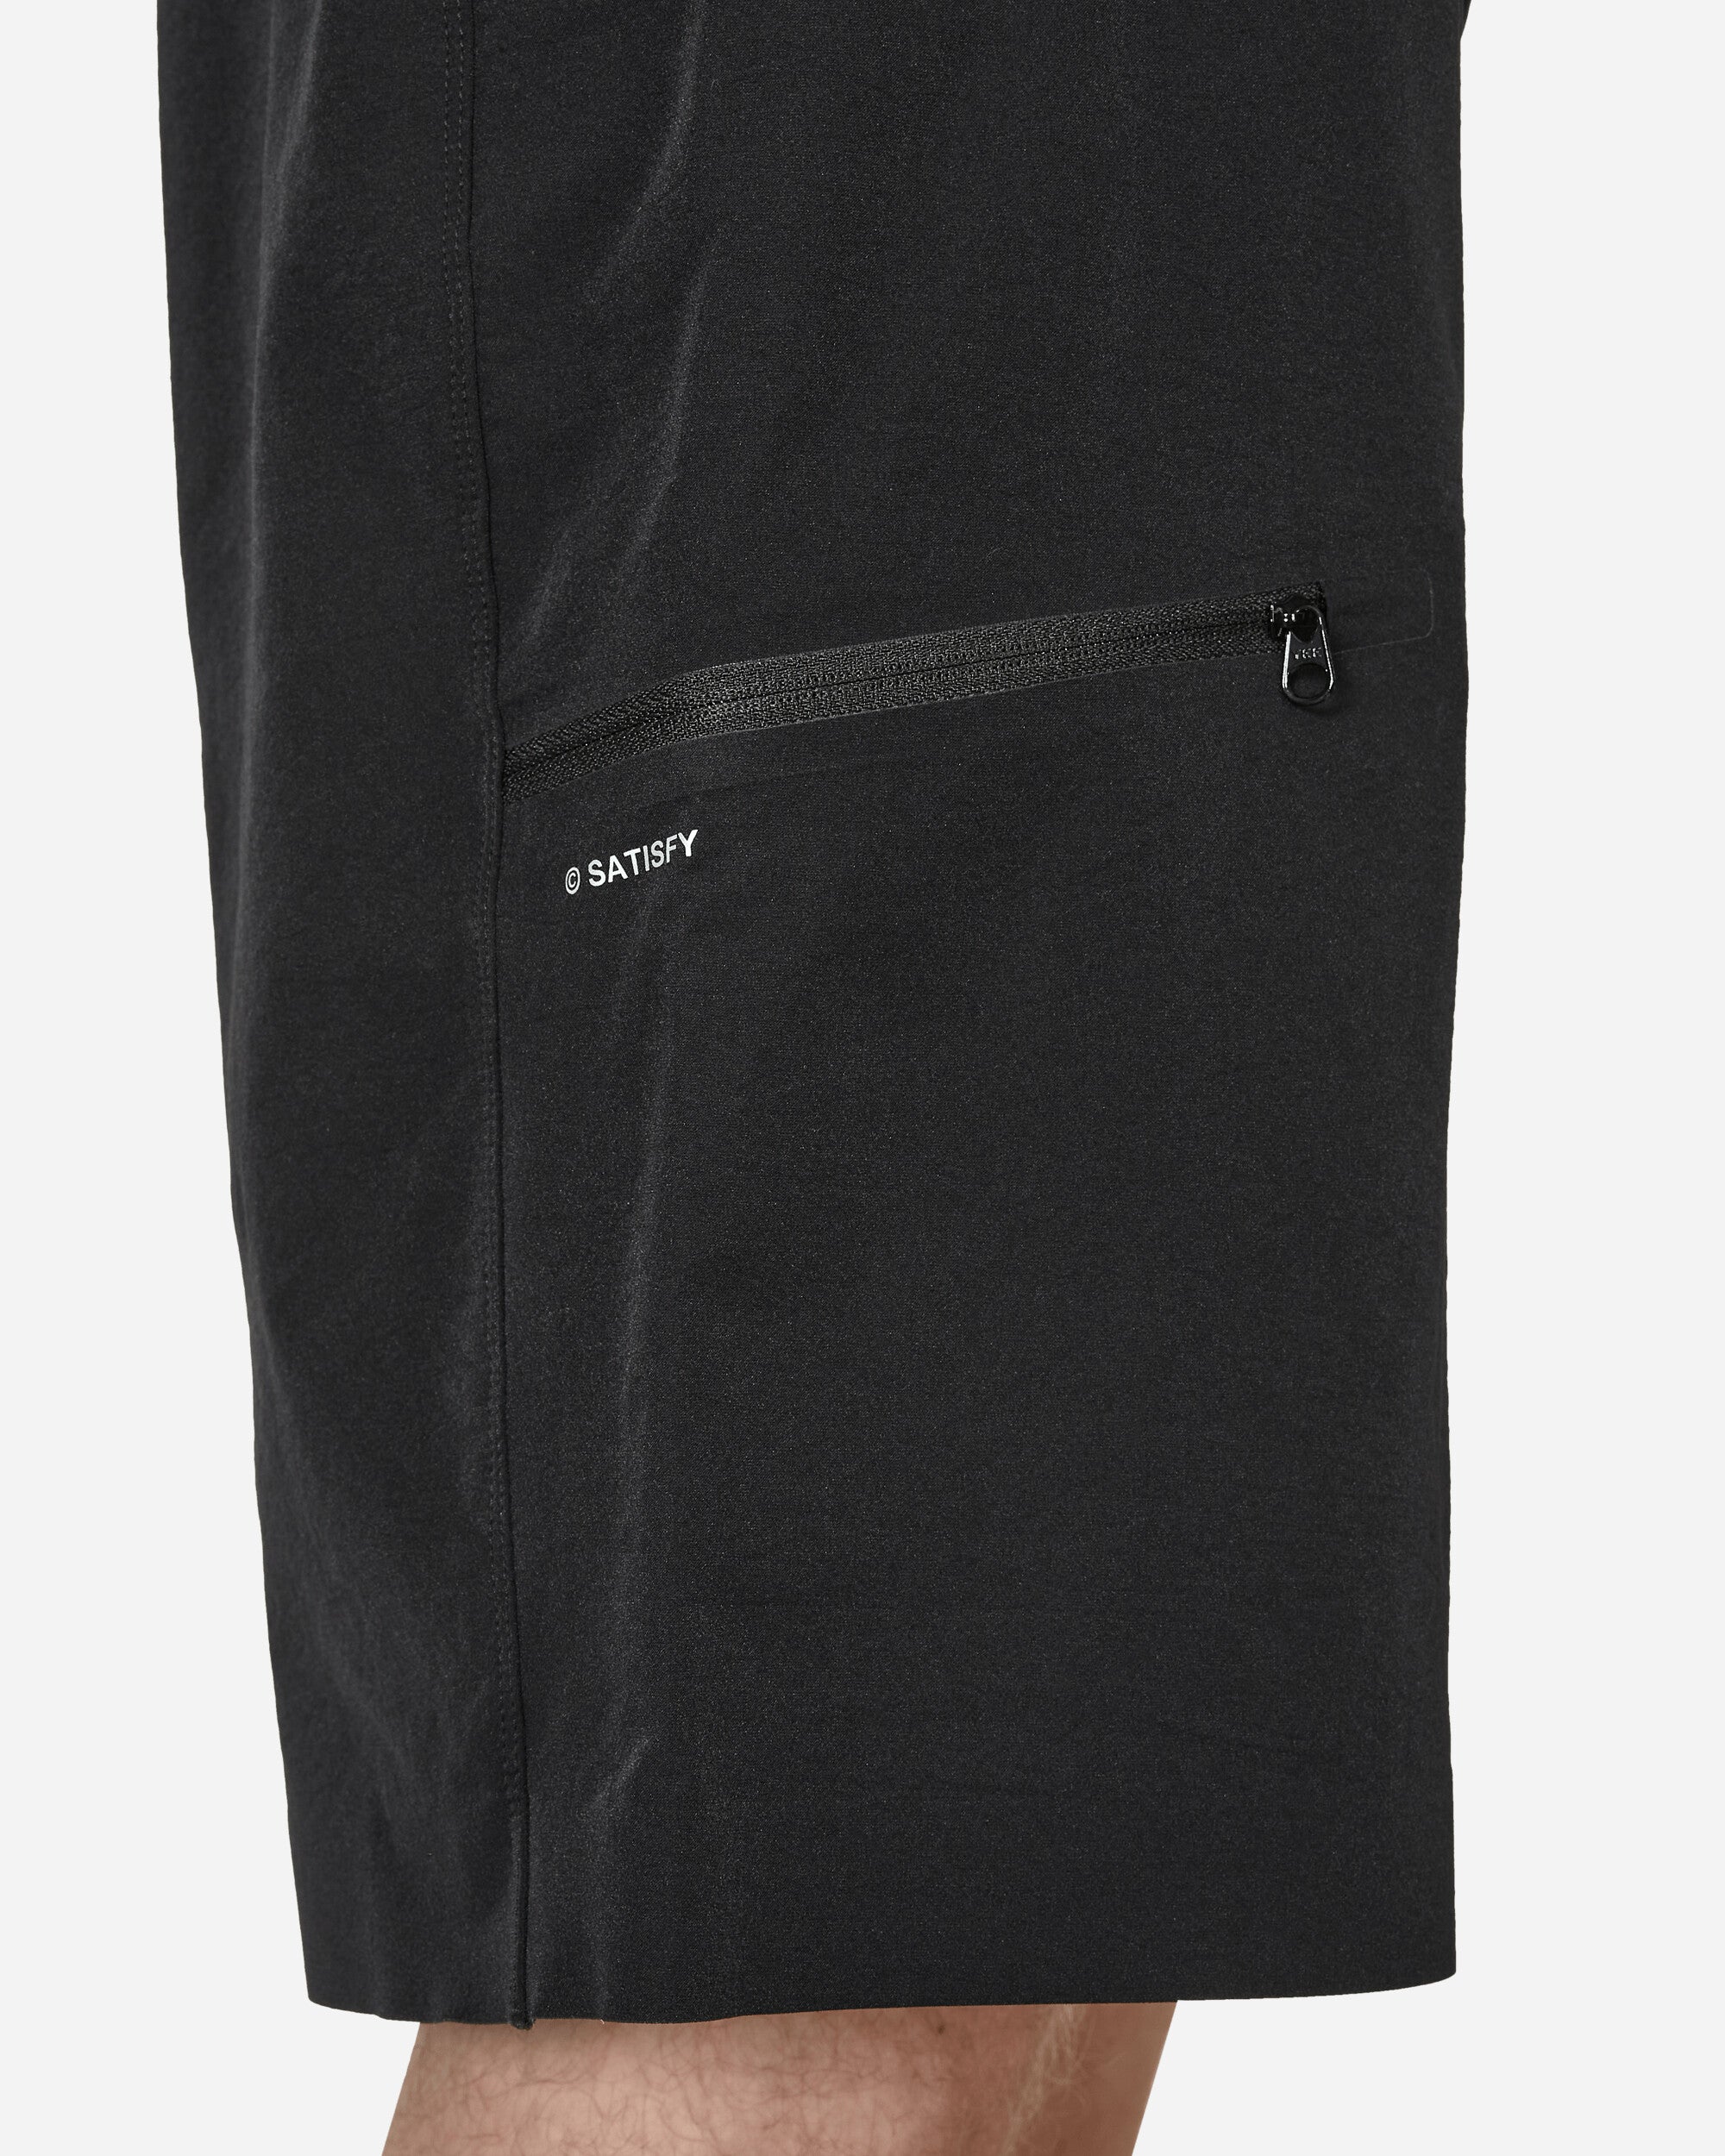 Satisfy Peaceshell Solotex Shorts Black Shorts Cargo Short 5249 BK-CO